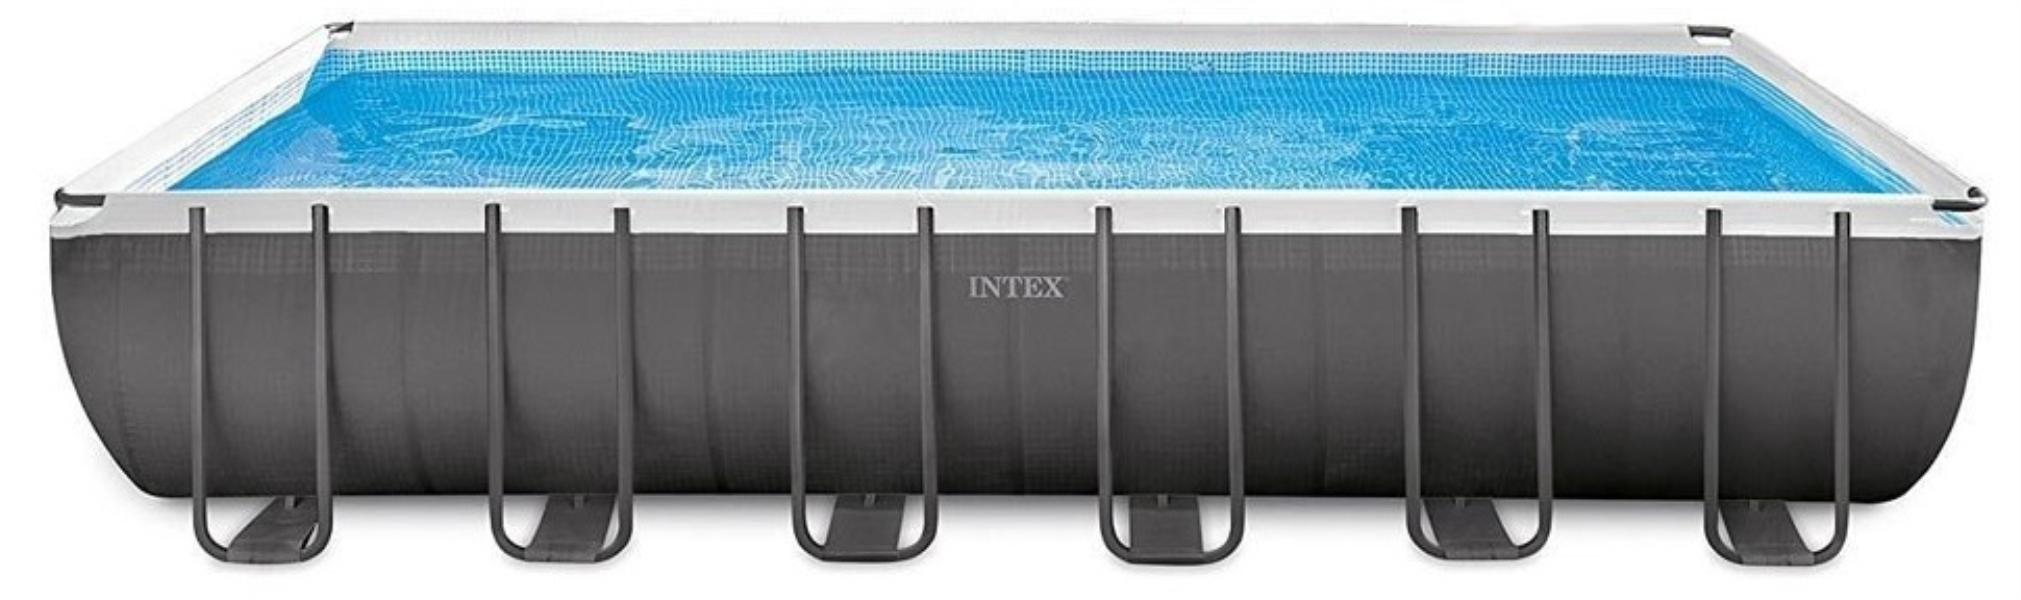 INTEX Pool 7.32mX3.66mX1.32m